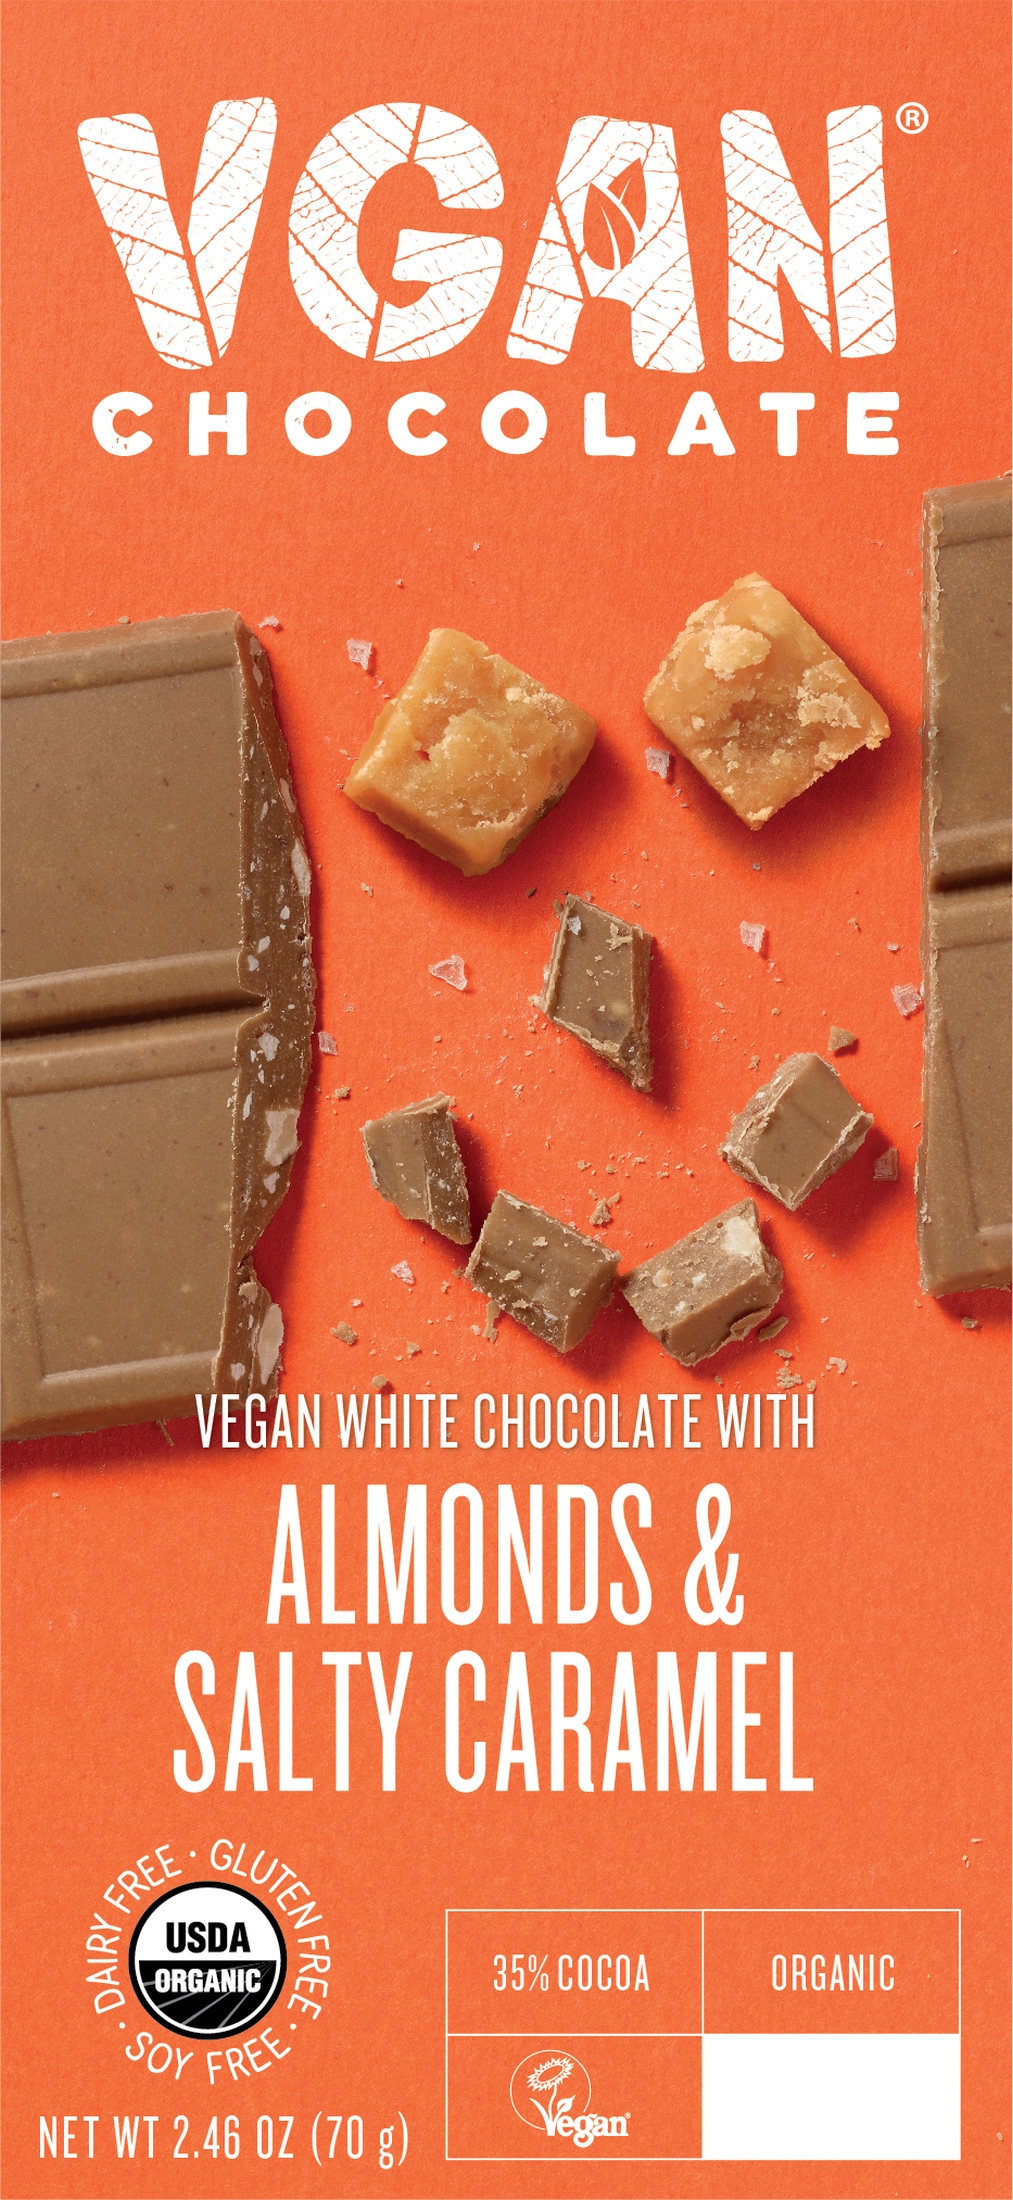 VGAN White Chocolate W/ Almonds & Salty Caramel - 2.46Oz Bar - image 4 of 7